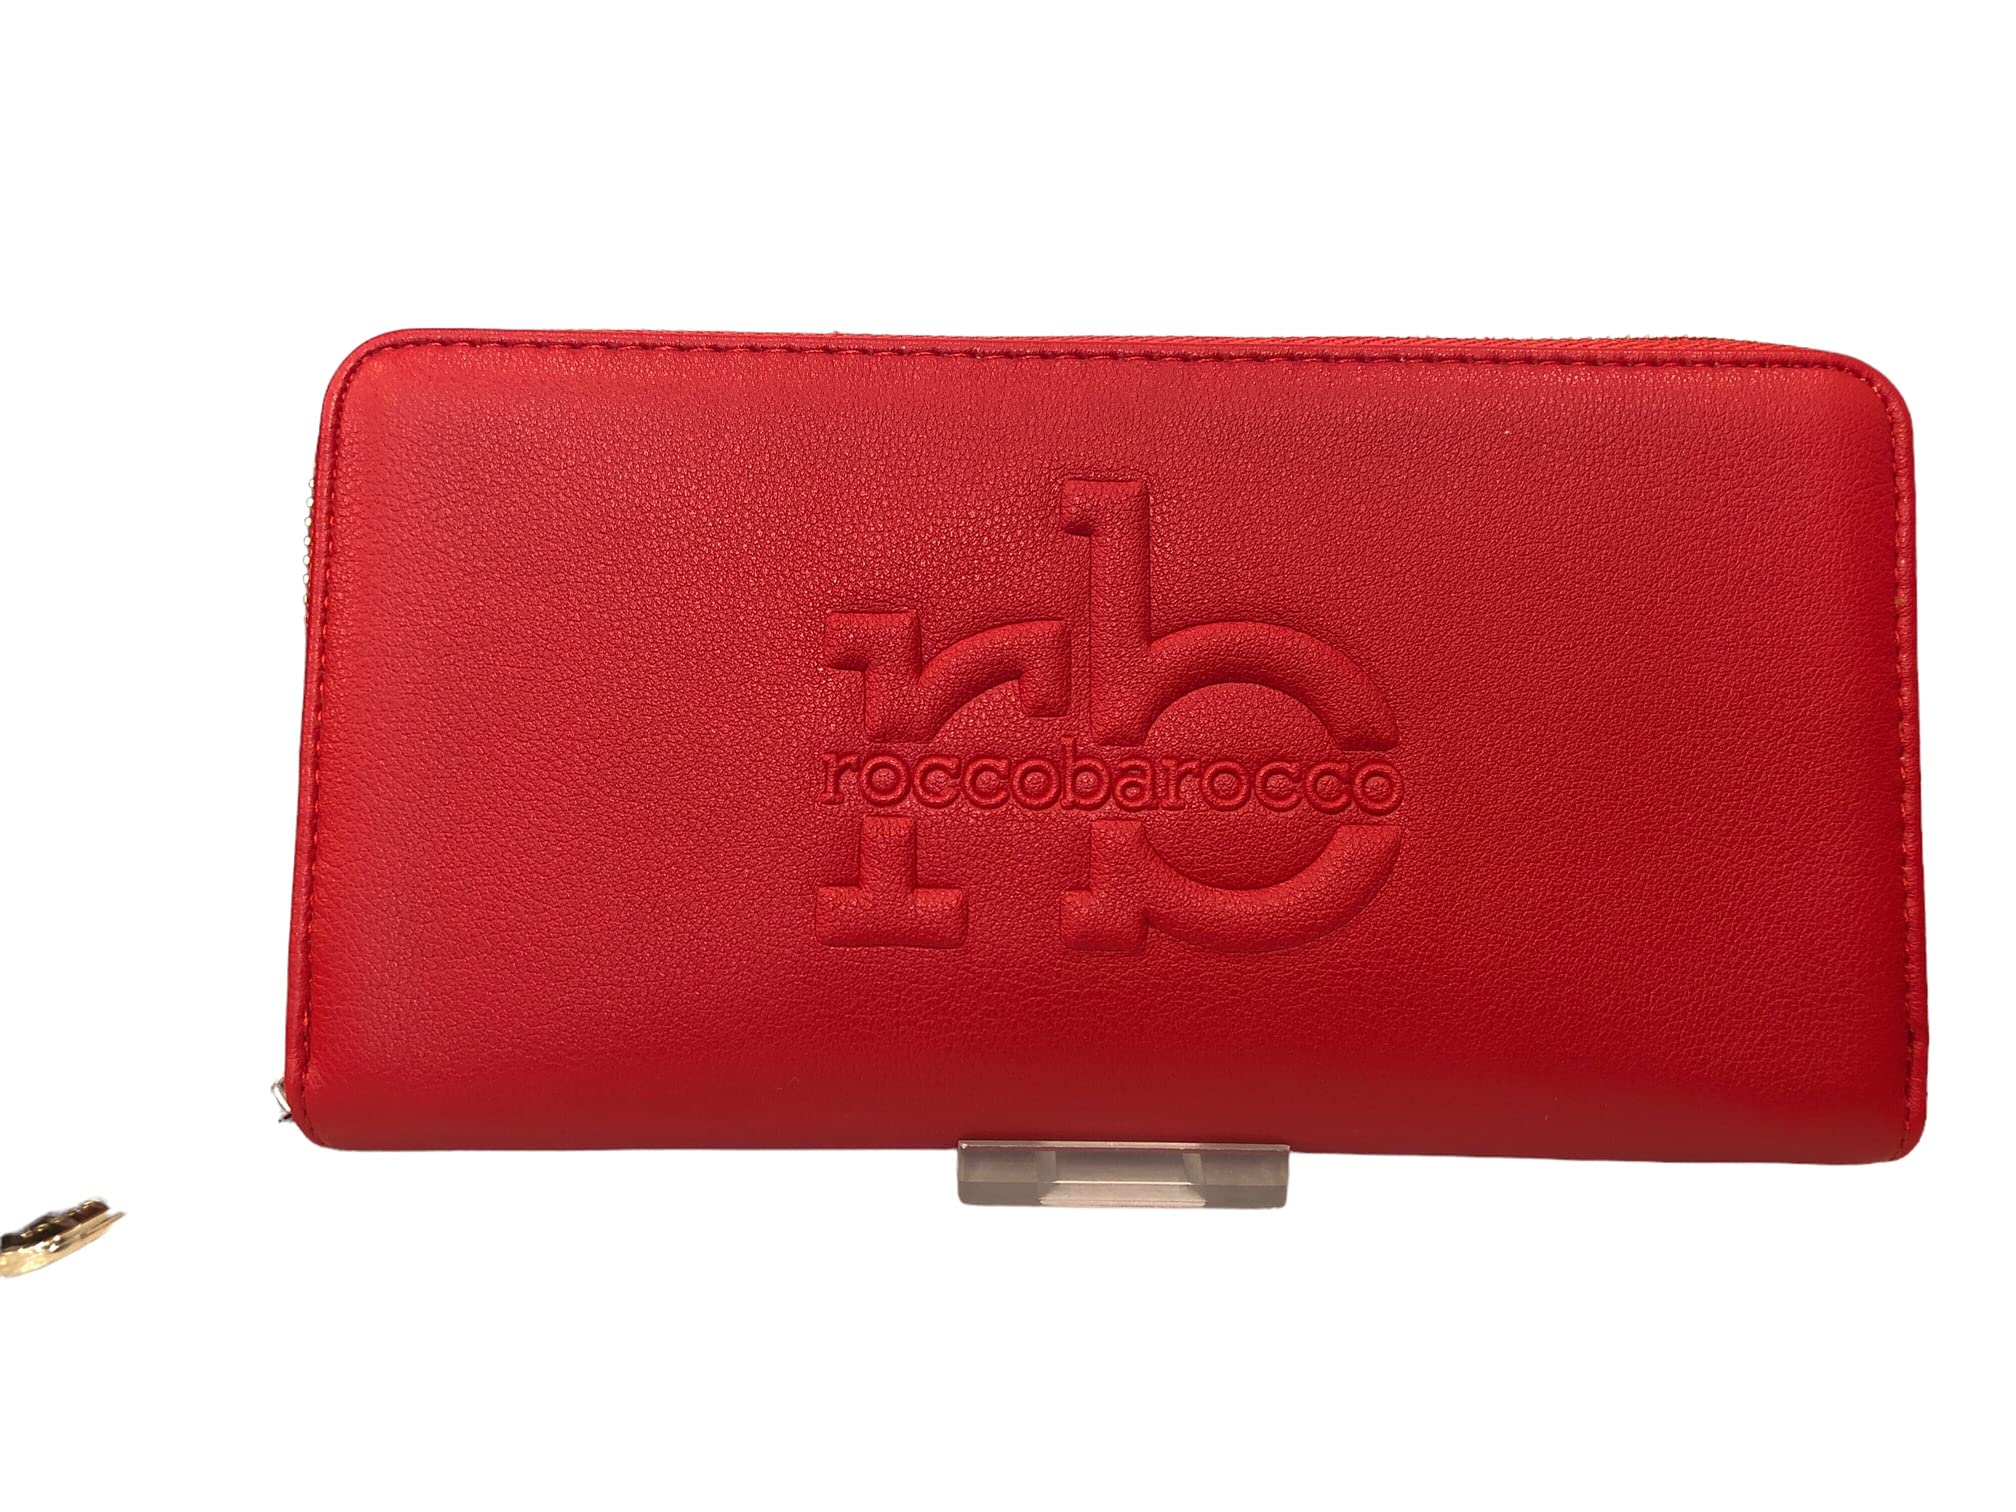 Rocco Barocco Damen-Geldbörse mit Reißverschluss - Lady Wallet WTIH Reißverschluss 19 x 11 Rot, rot, cm: altezza 11, larghezza 19, spessore 2, Casual